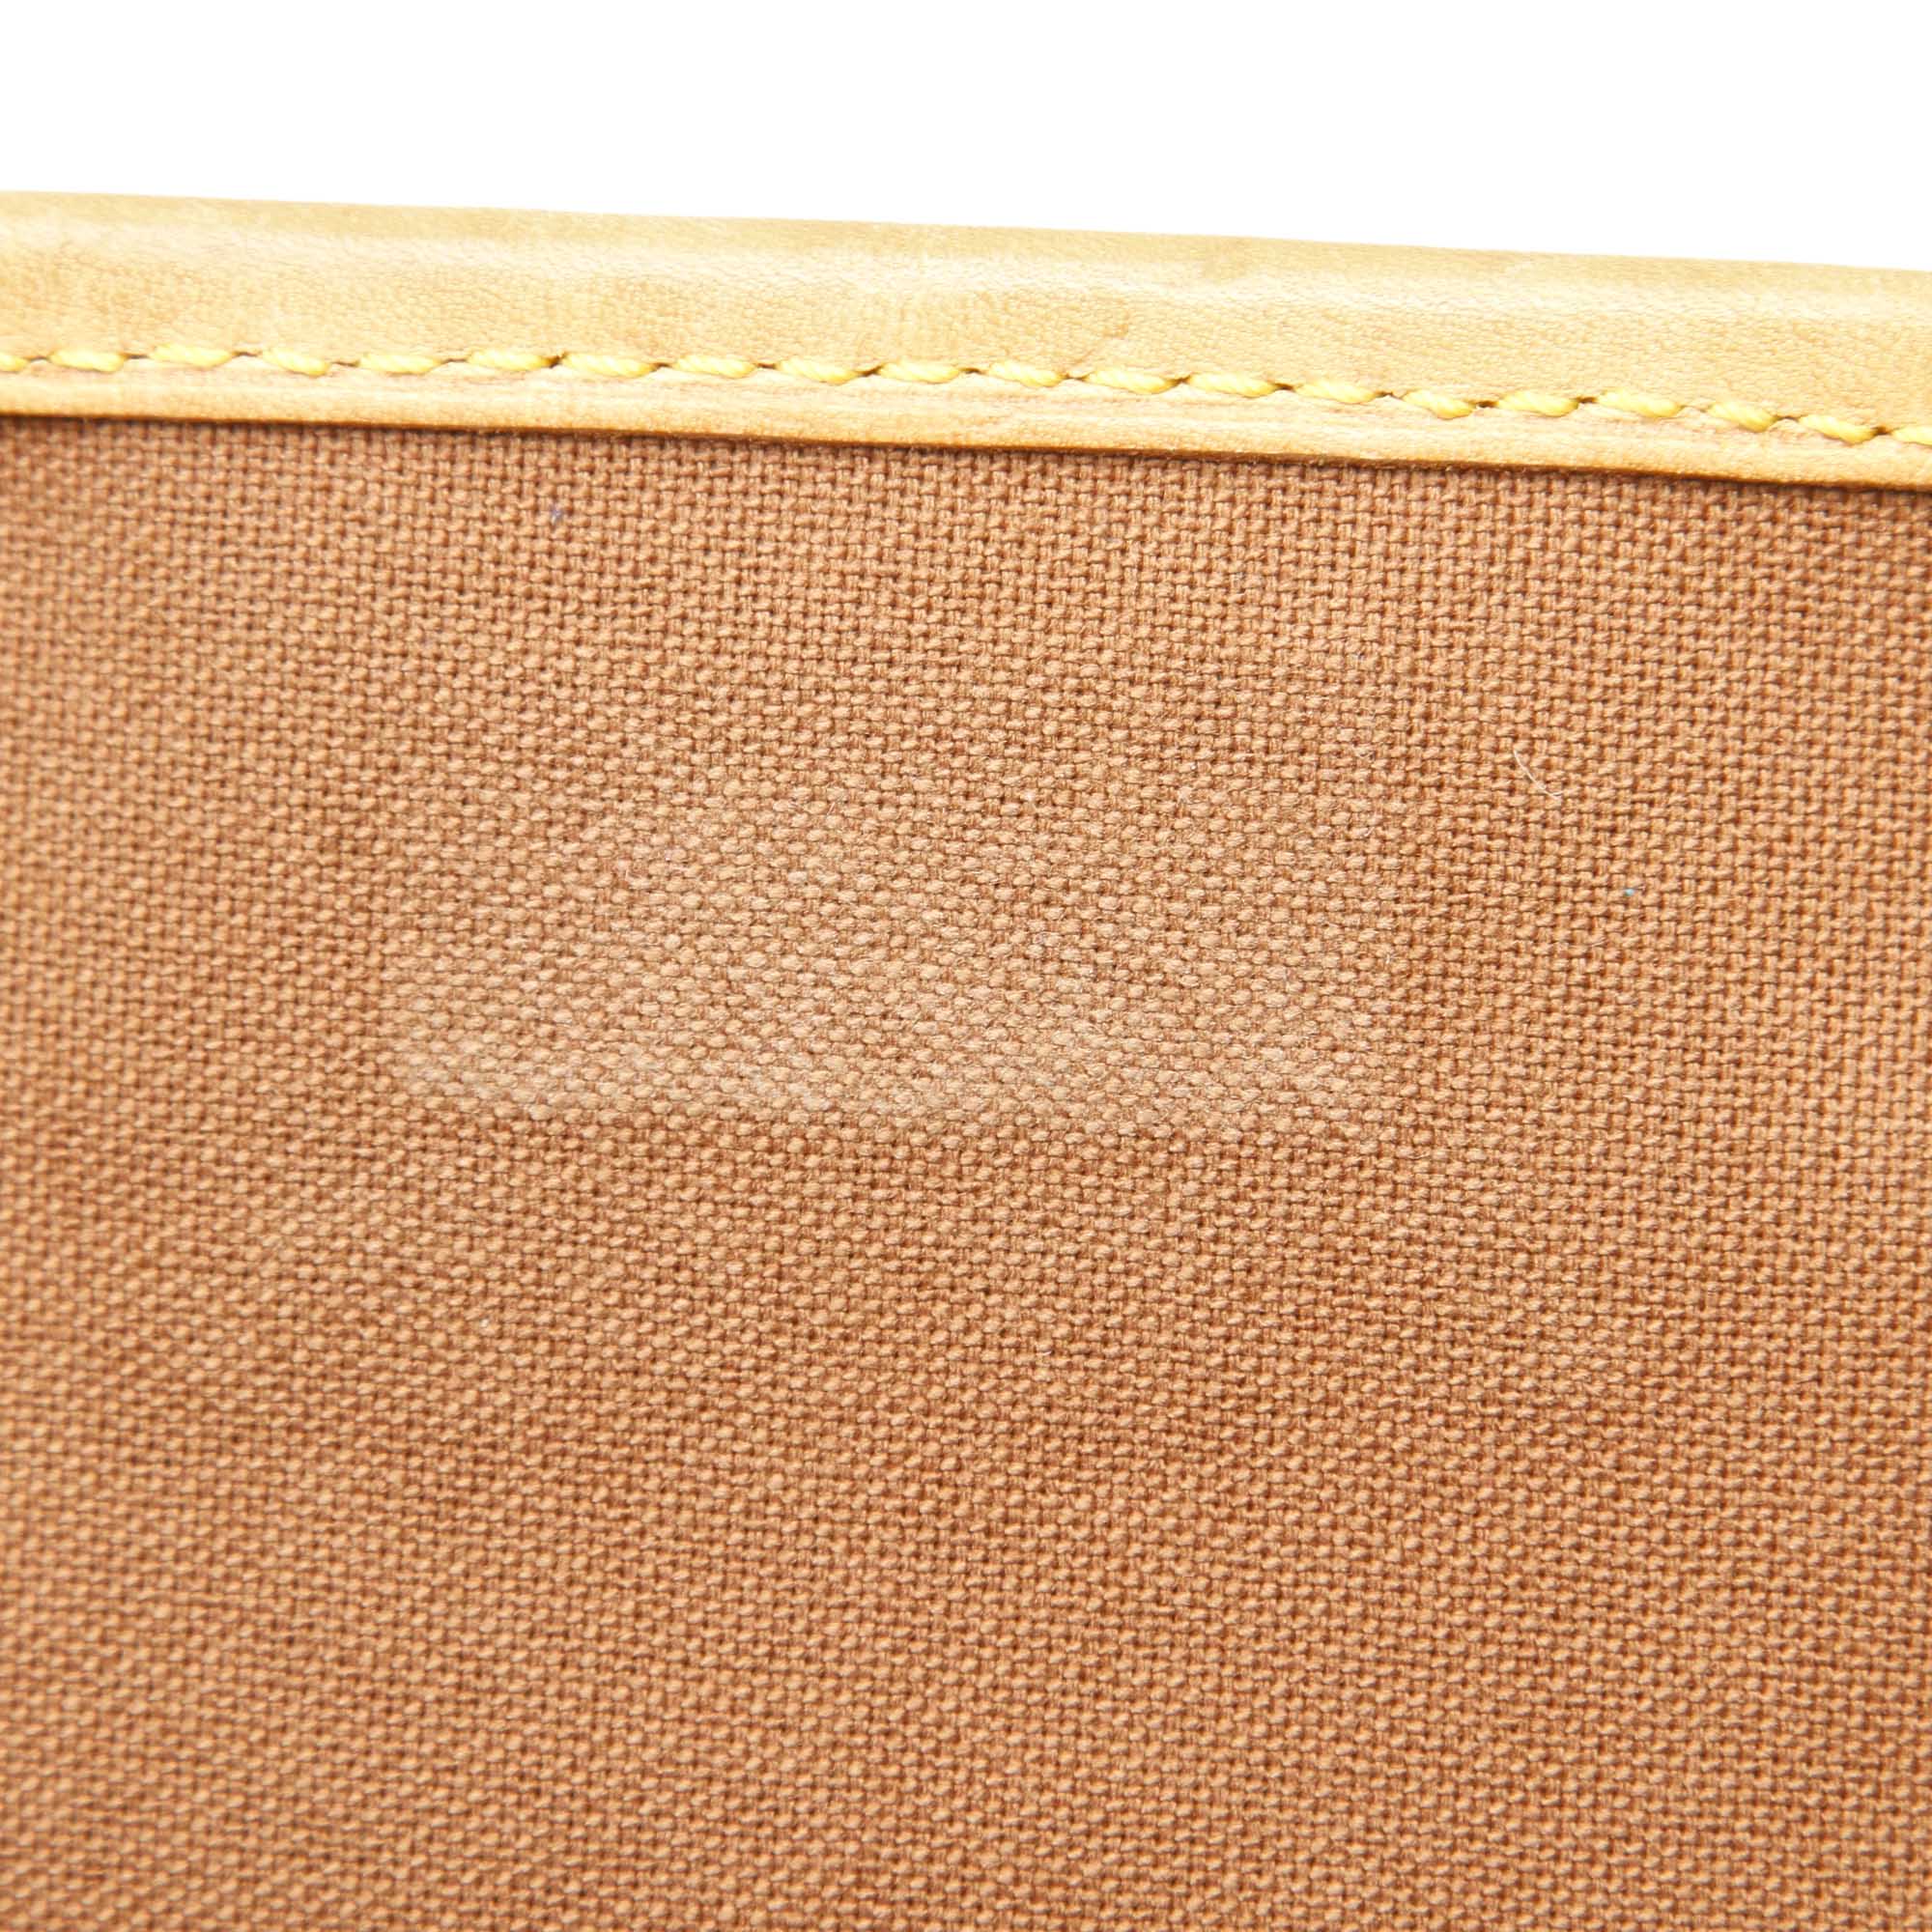 Louis Vuitton 2006 pre-owned Bosphore belt bag - Brown, £1455.00